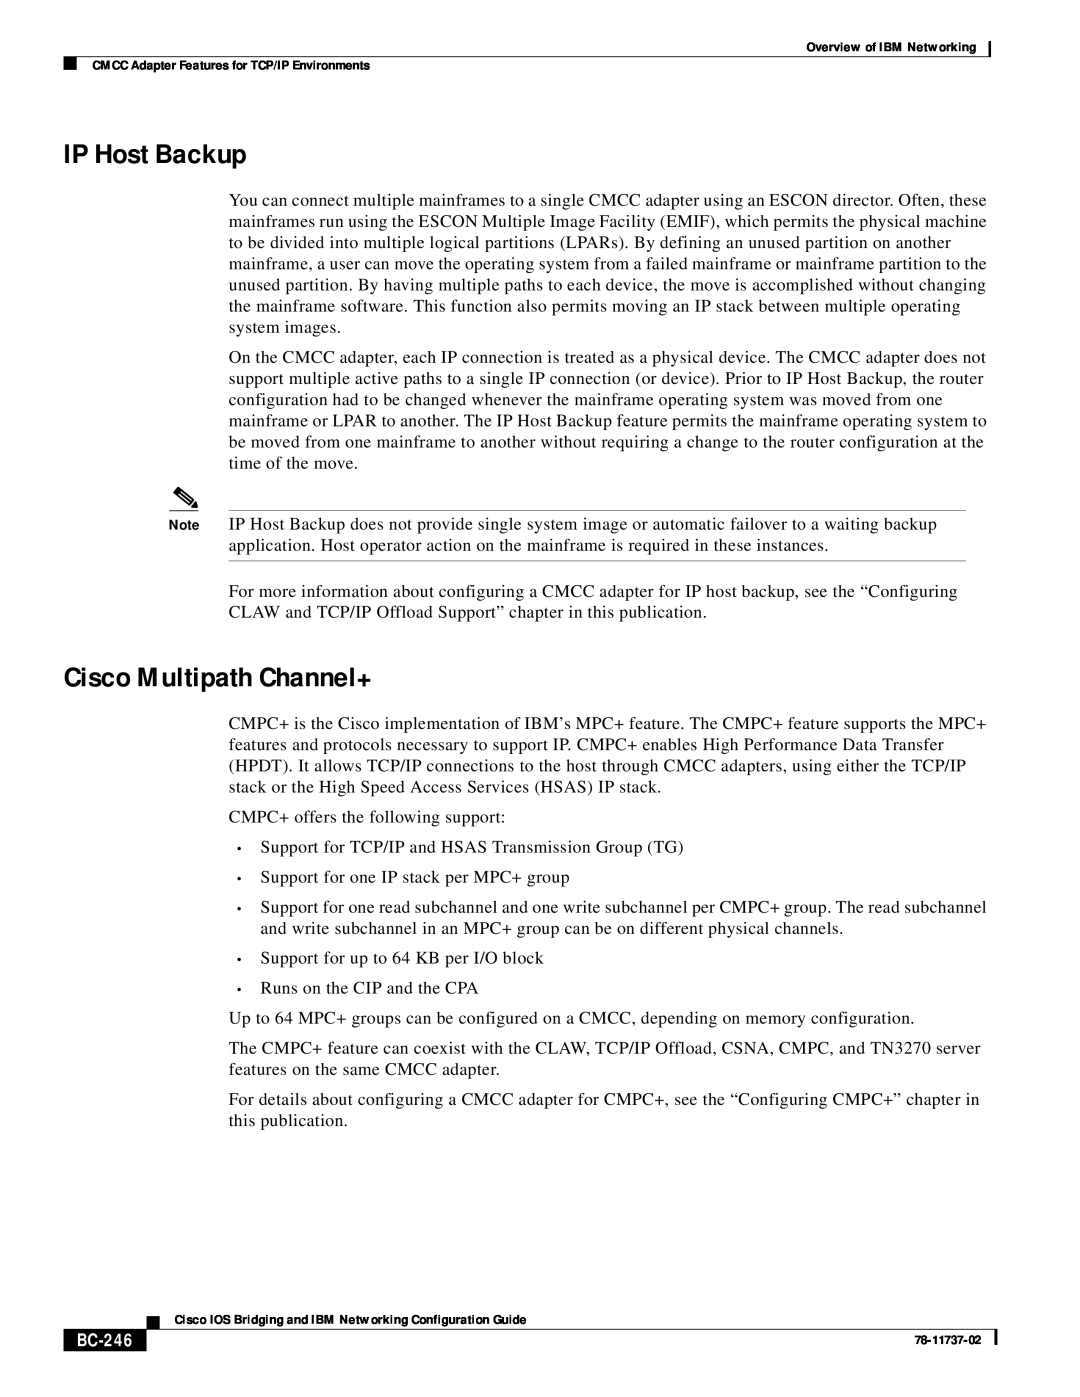 IBM BC-201 manual IP Host Backup, Cisco Multipath Channel+, BC-246 